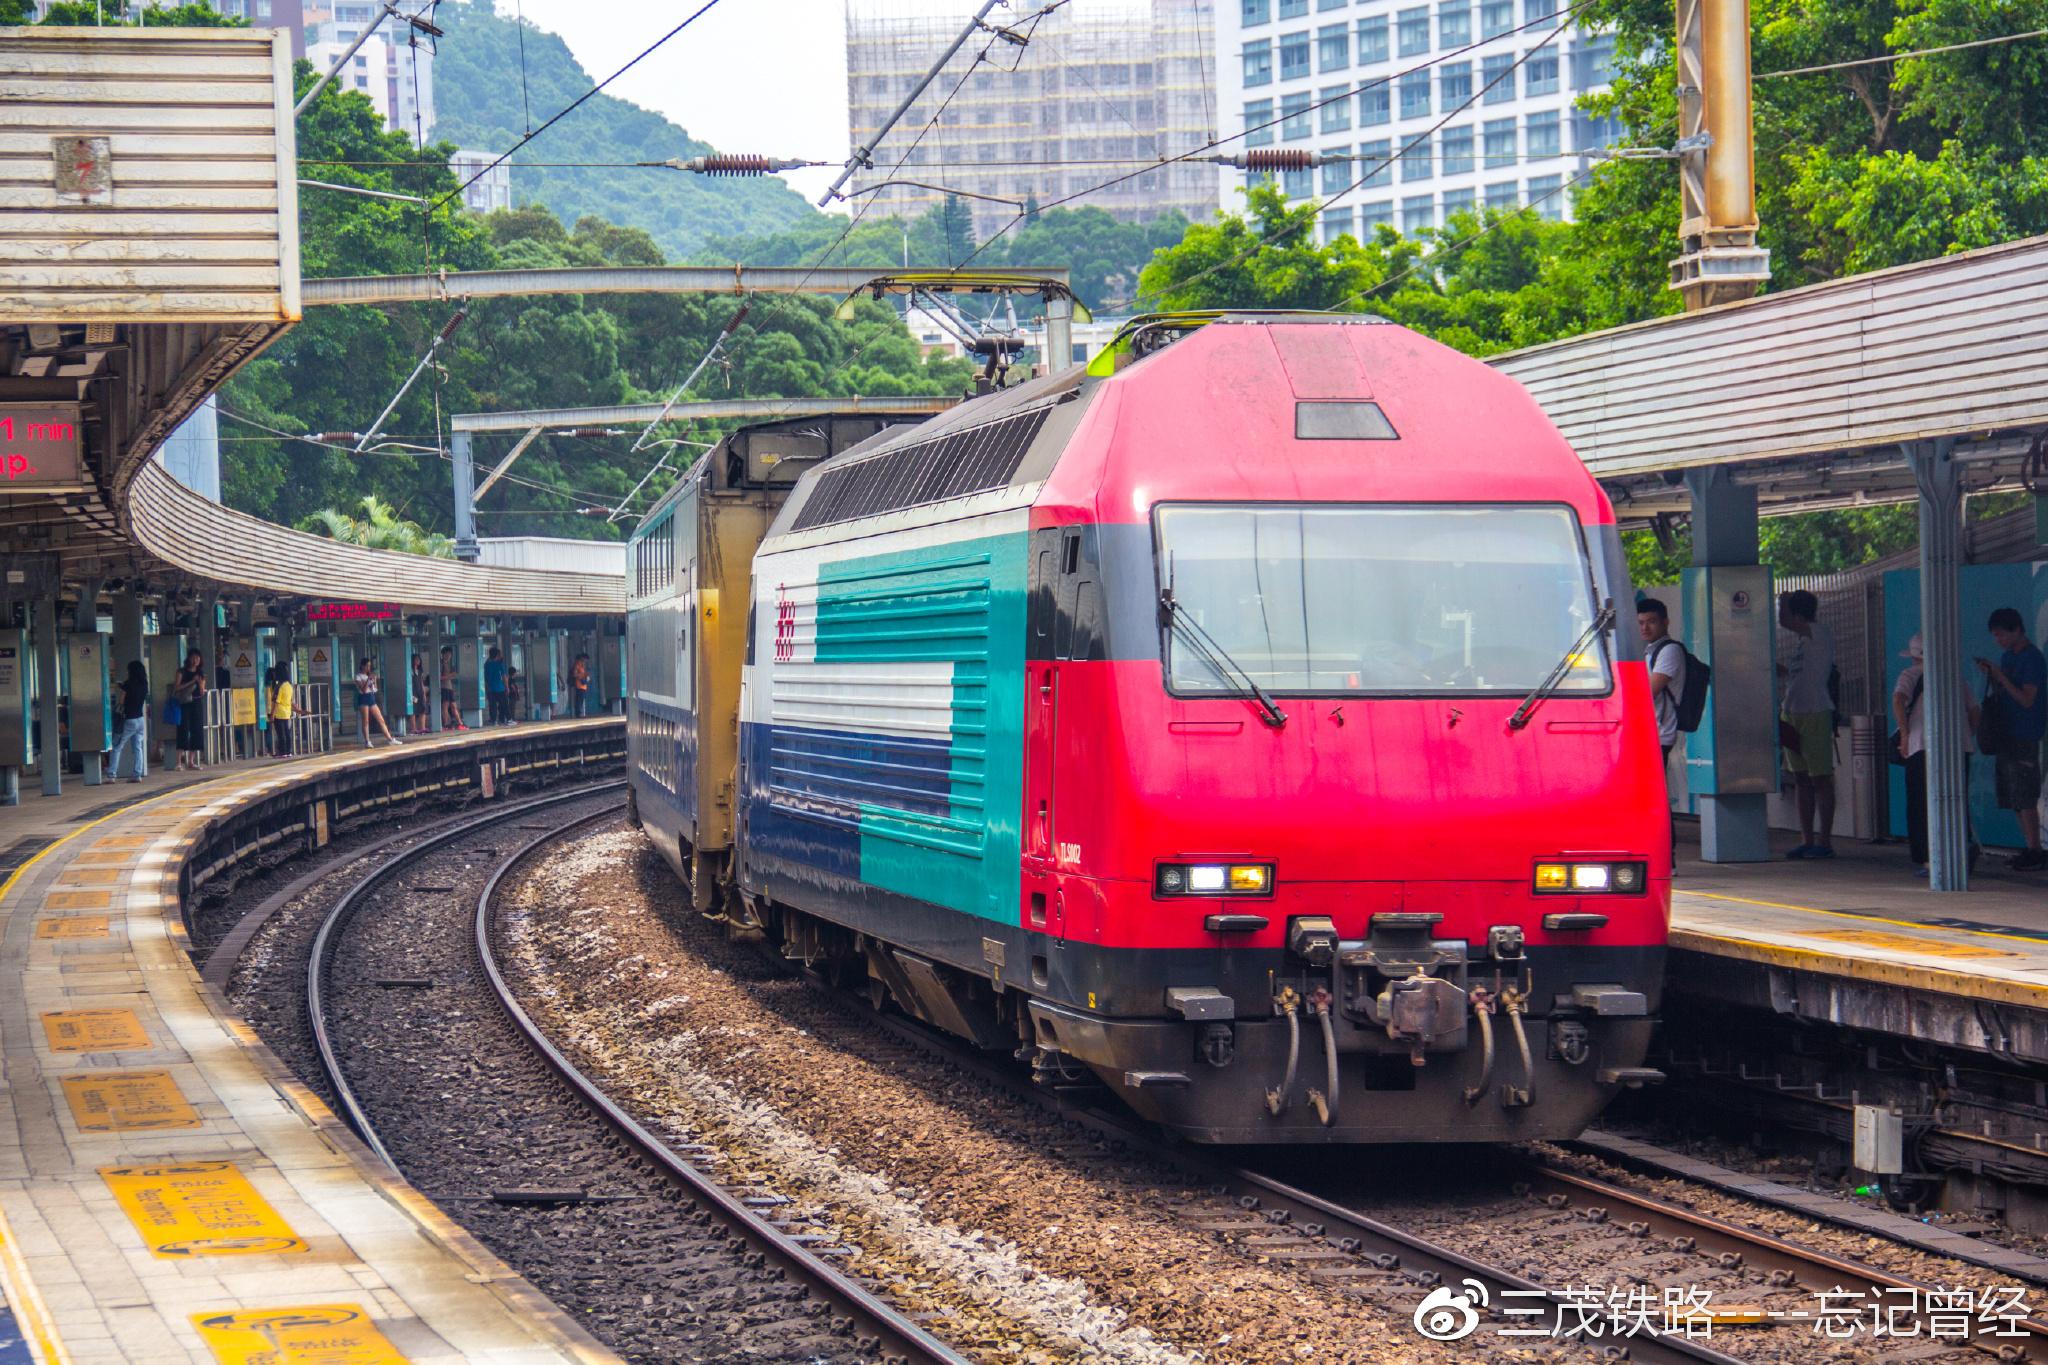 Simple Hong Kong's New MTR Map / Railway Lines Handbook | Spacious